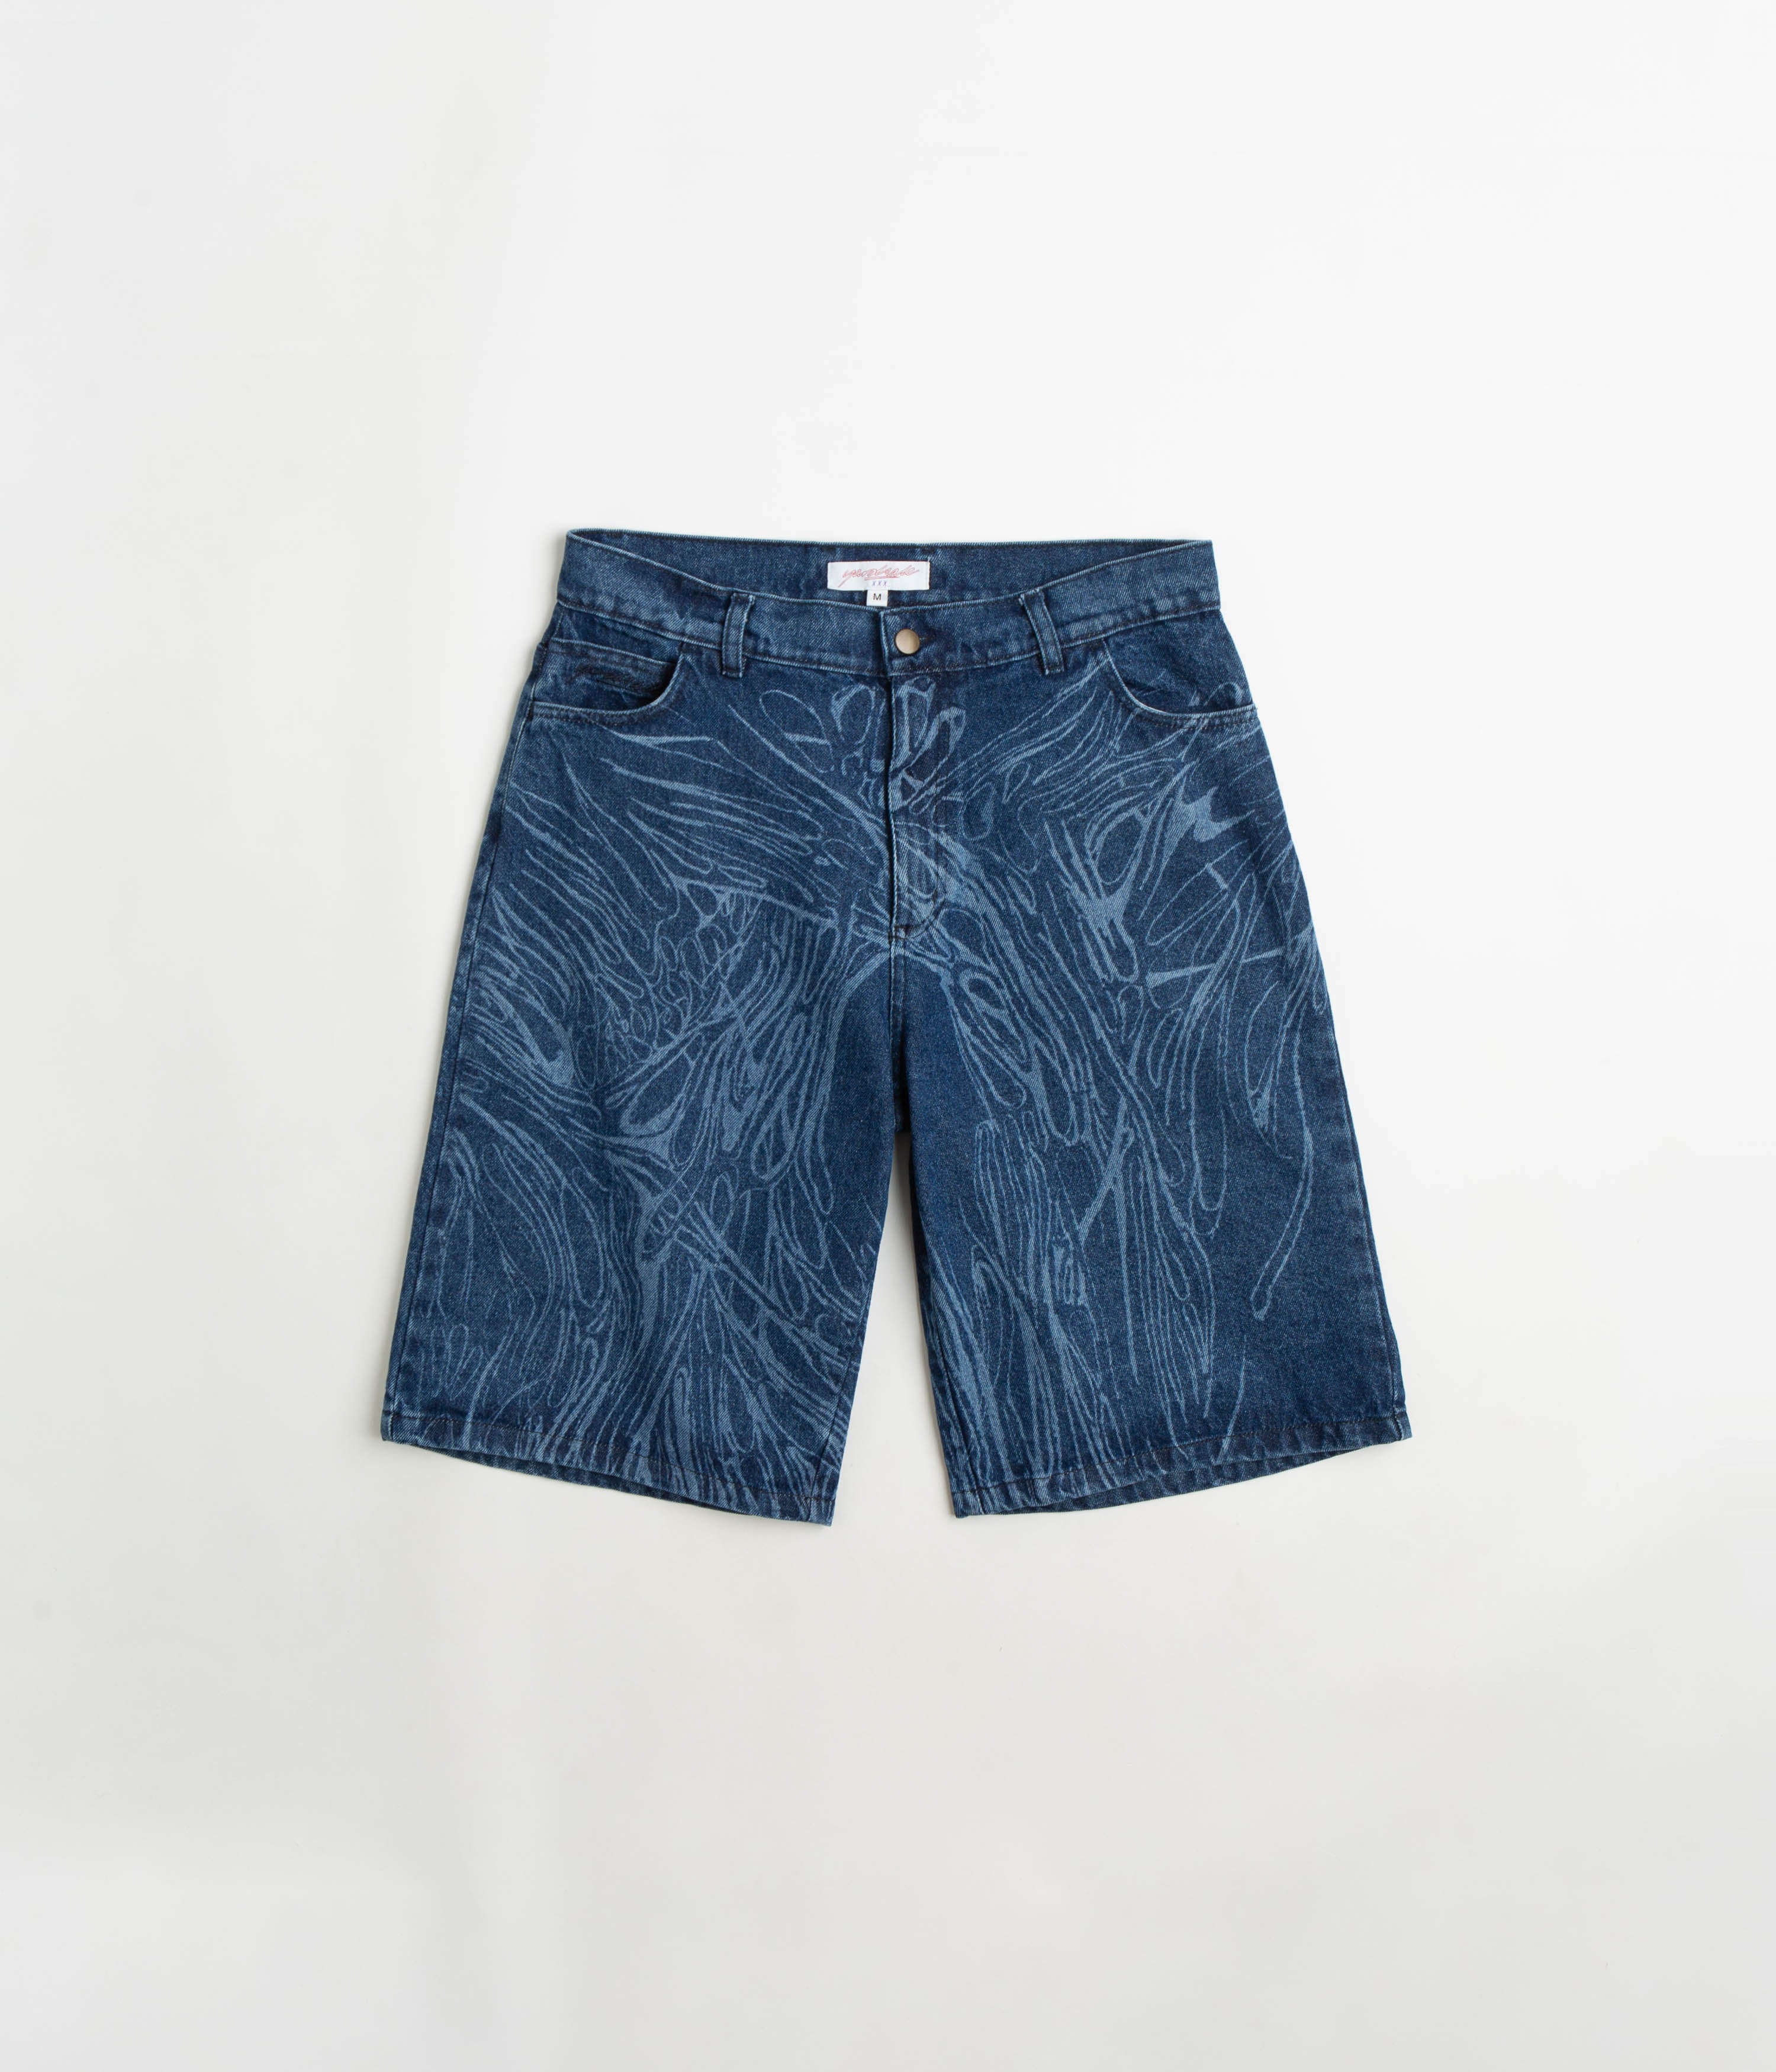 Yardsale Ripper Shorts - Denim | Flatspot